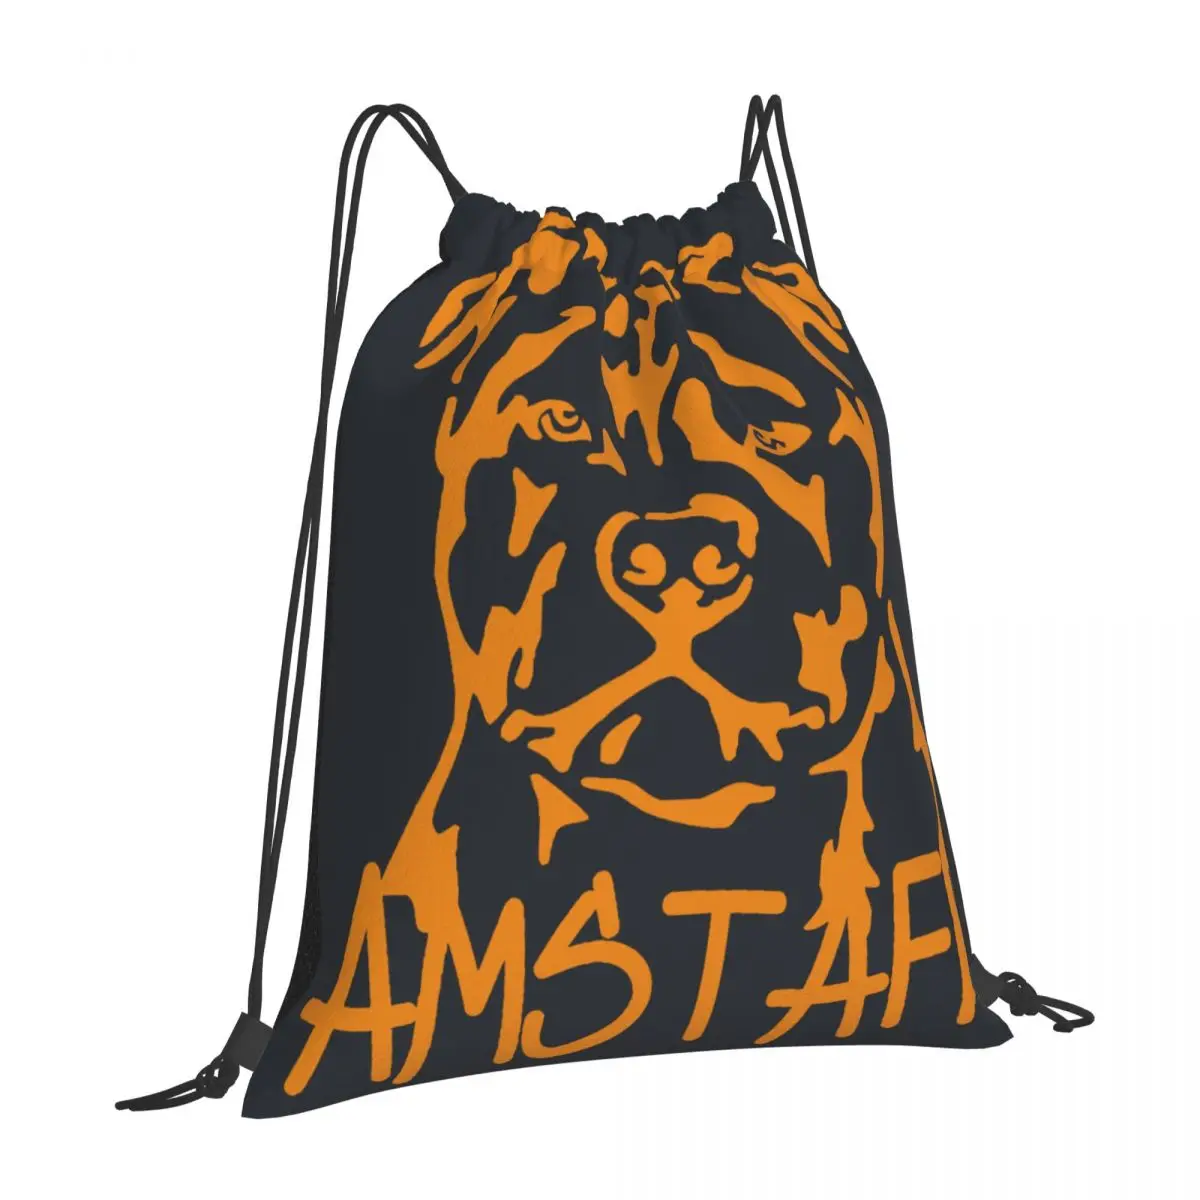 Американские рюкзаки Amstaff на шнурке, рюкзаки, спортивная сумка, маленький рюкзак, Повседневная сумка для фитнеса и плавания